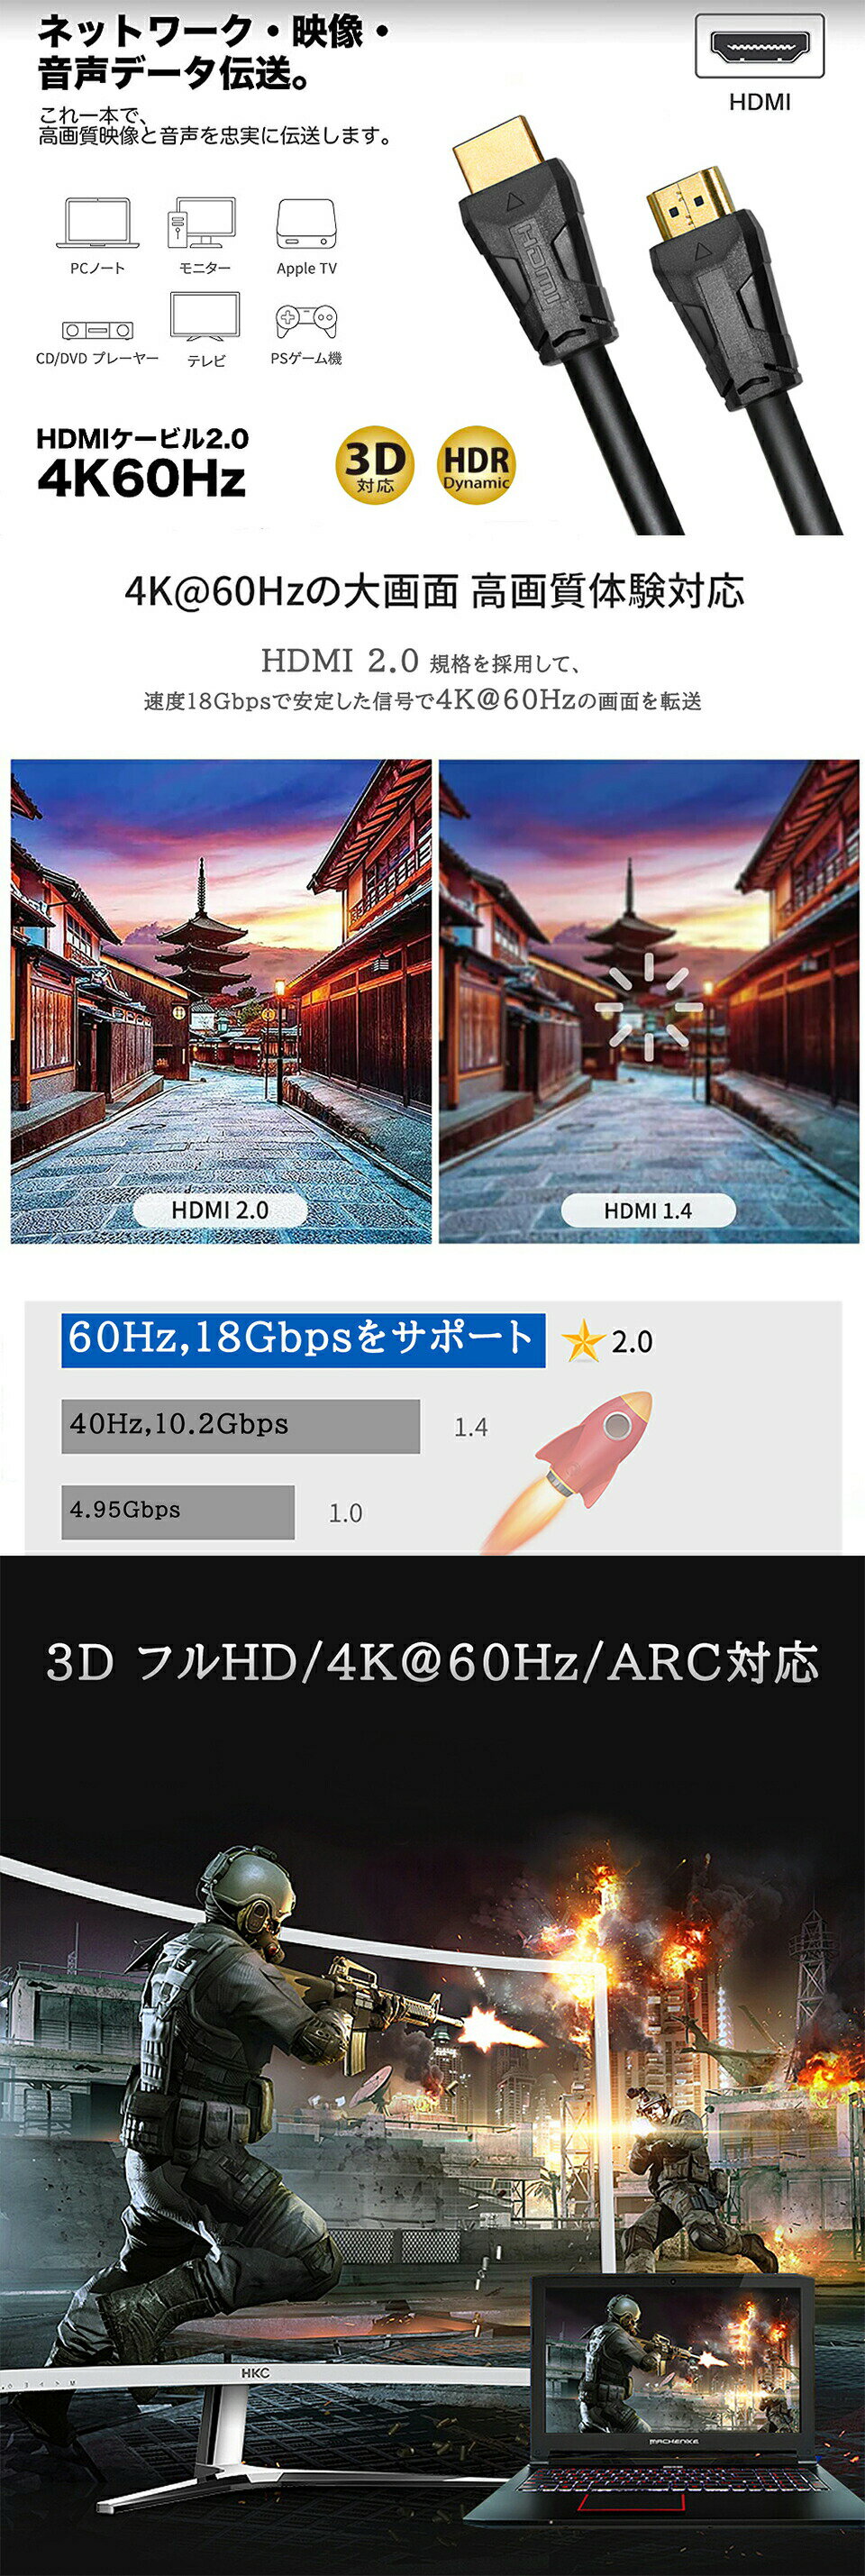 858shop HDMIケーブル 3m 3.0m 300cm Ver.2.0 H